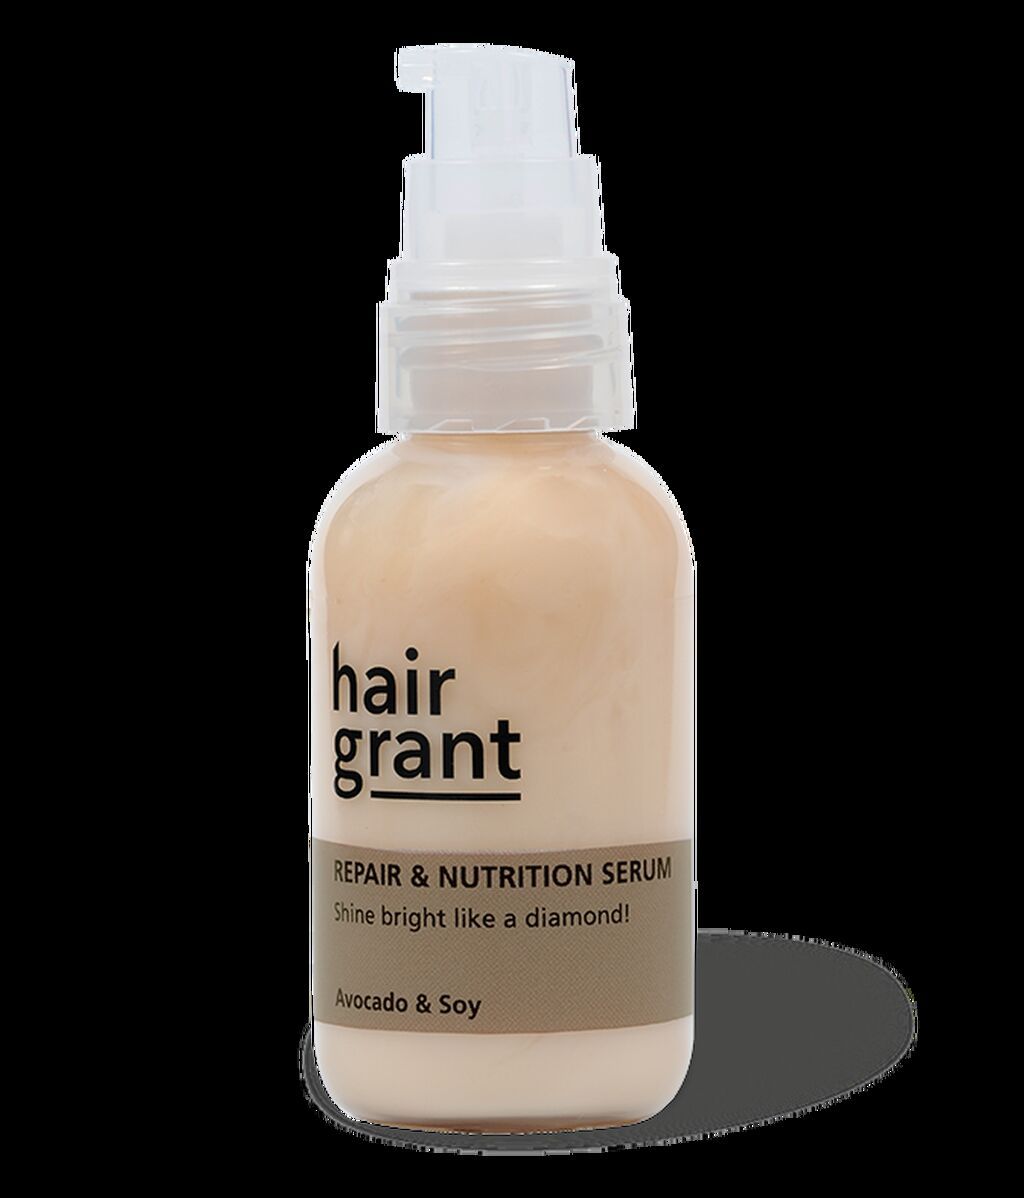 HAIR GRANT REPAIR & NUTRITION SERUM